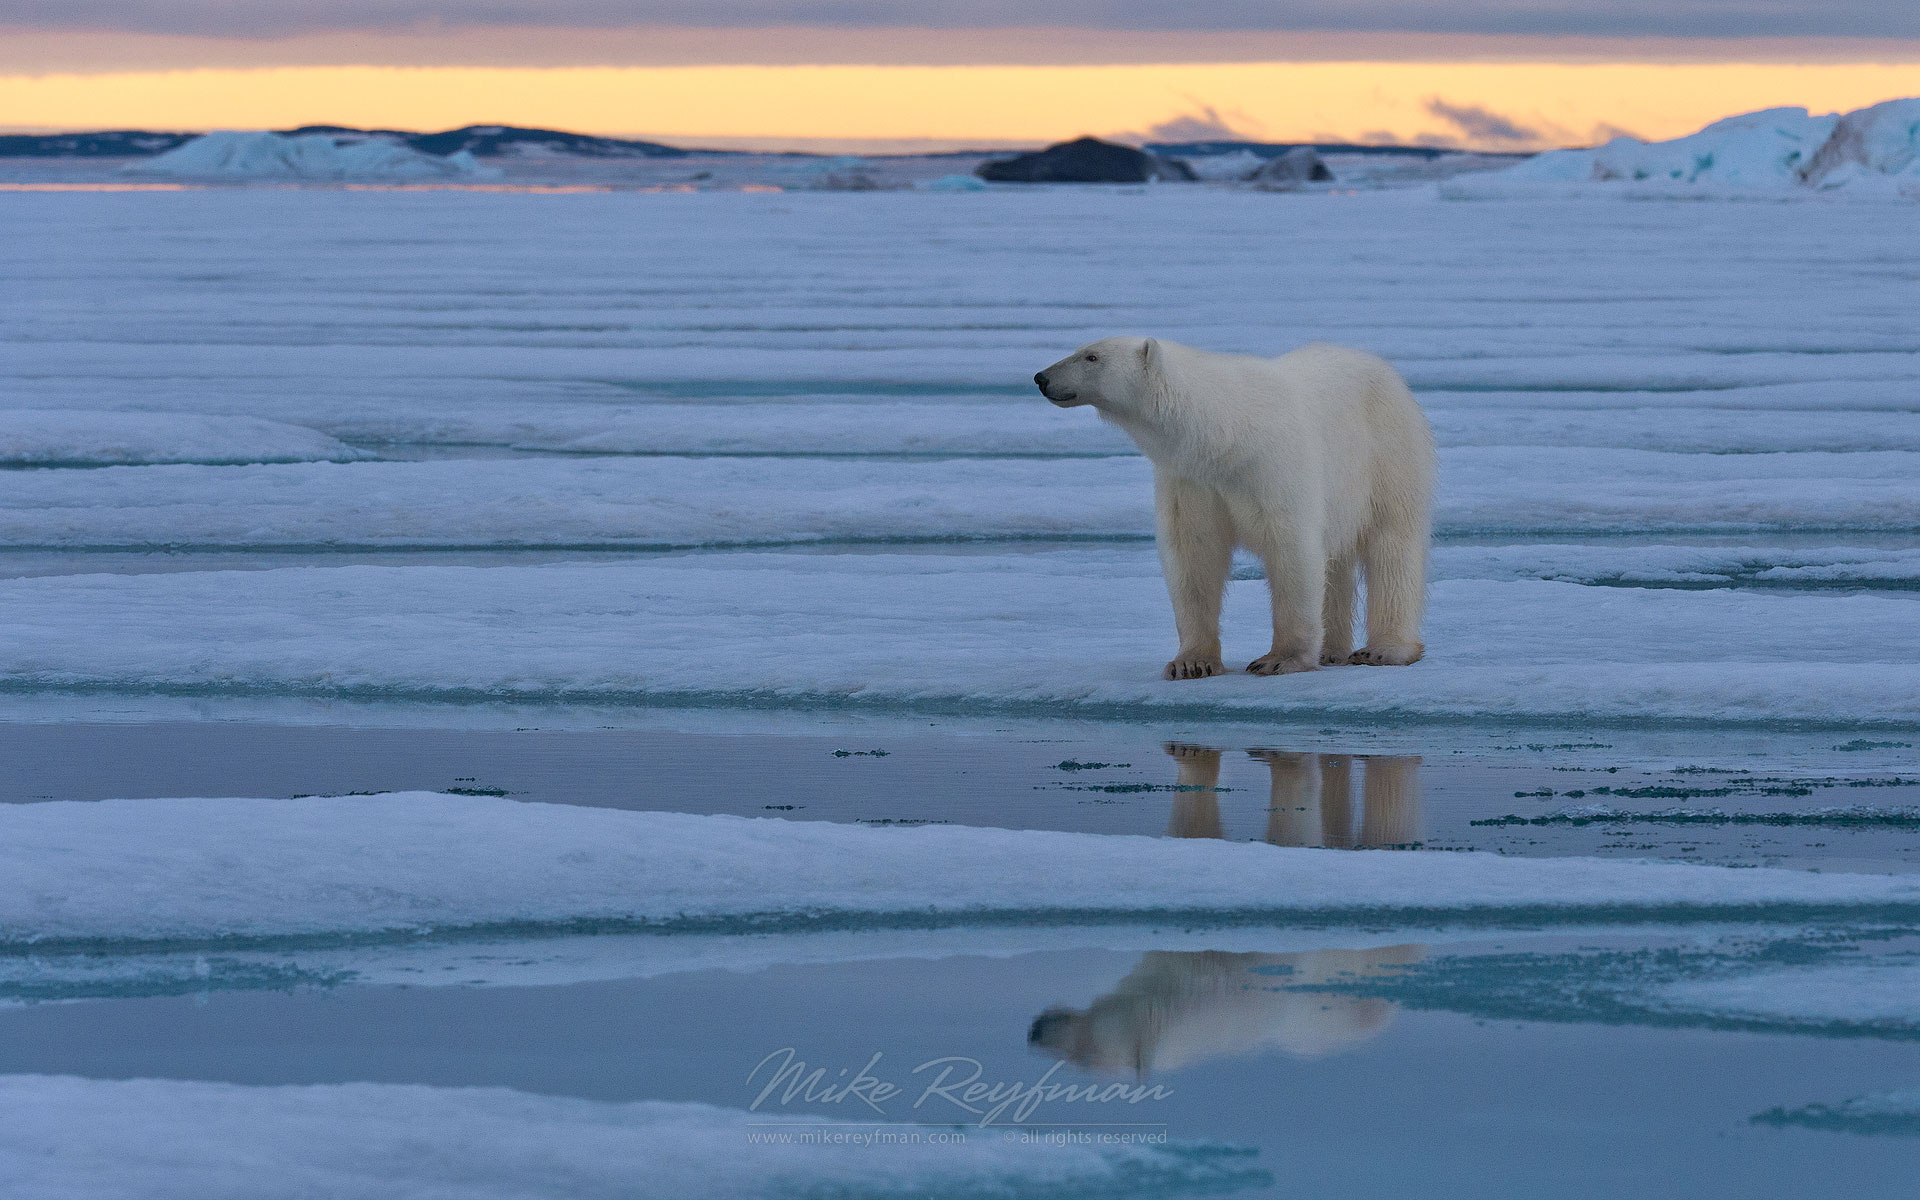 Polar Bear standing on ice floe at sunset. Spitsbergen, Svalbard, Norway. - Polar-Bears-Svalbard-Spitsbergen-Norway - Mike Reyfman Photography